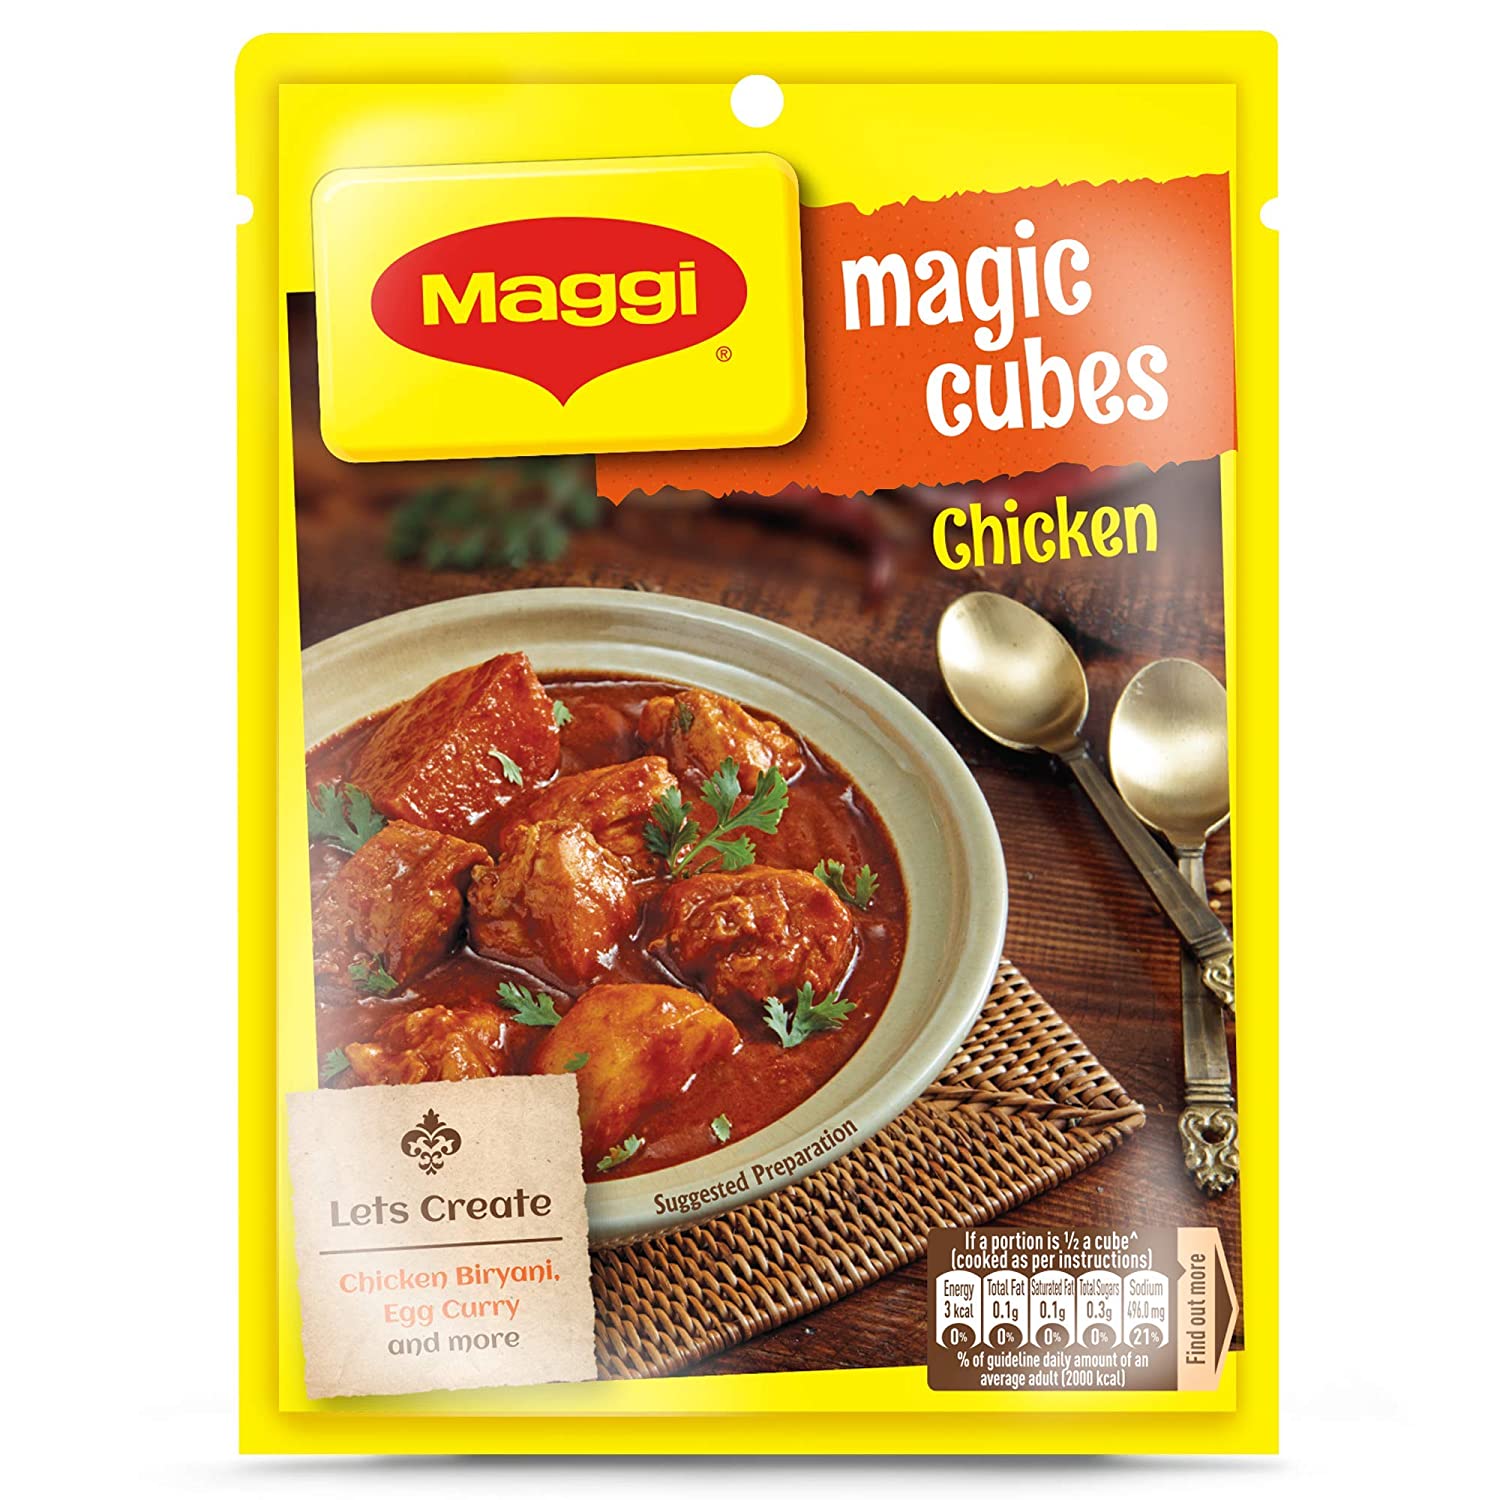 Maggi Magic Cubes Chicken Multi-Pack, 40g – (10 cubes x 4g)